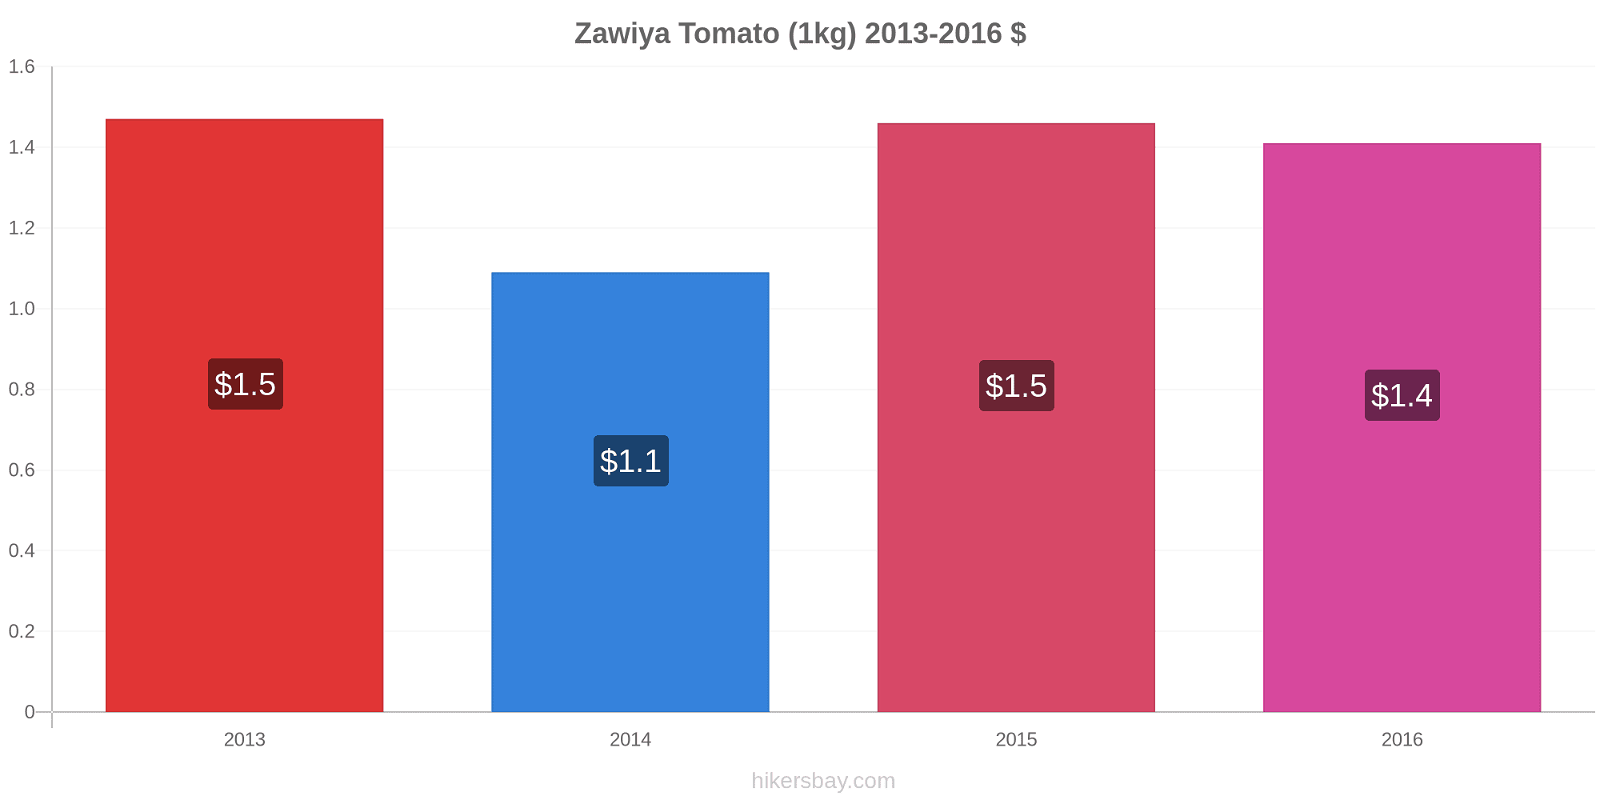 Zawiya price changes Tomato (1kg) hikersbay.com